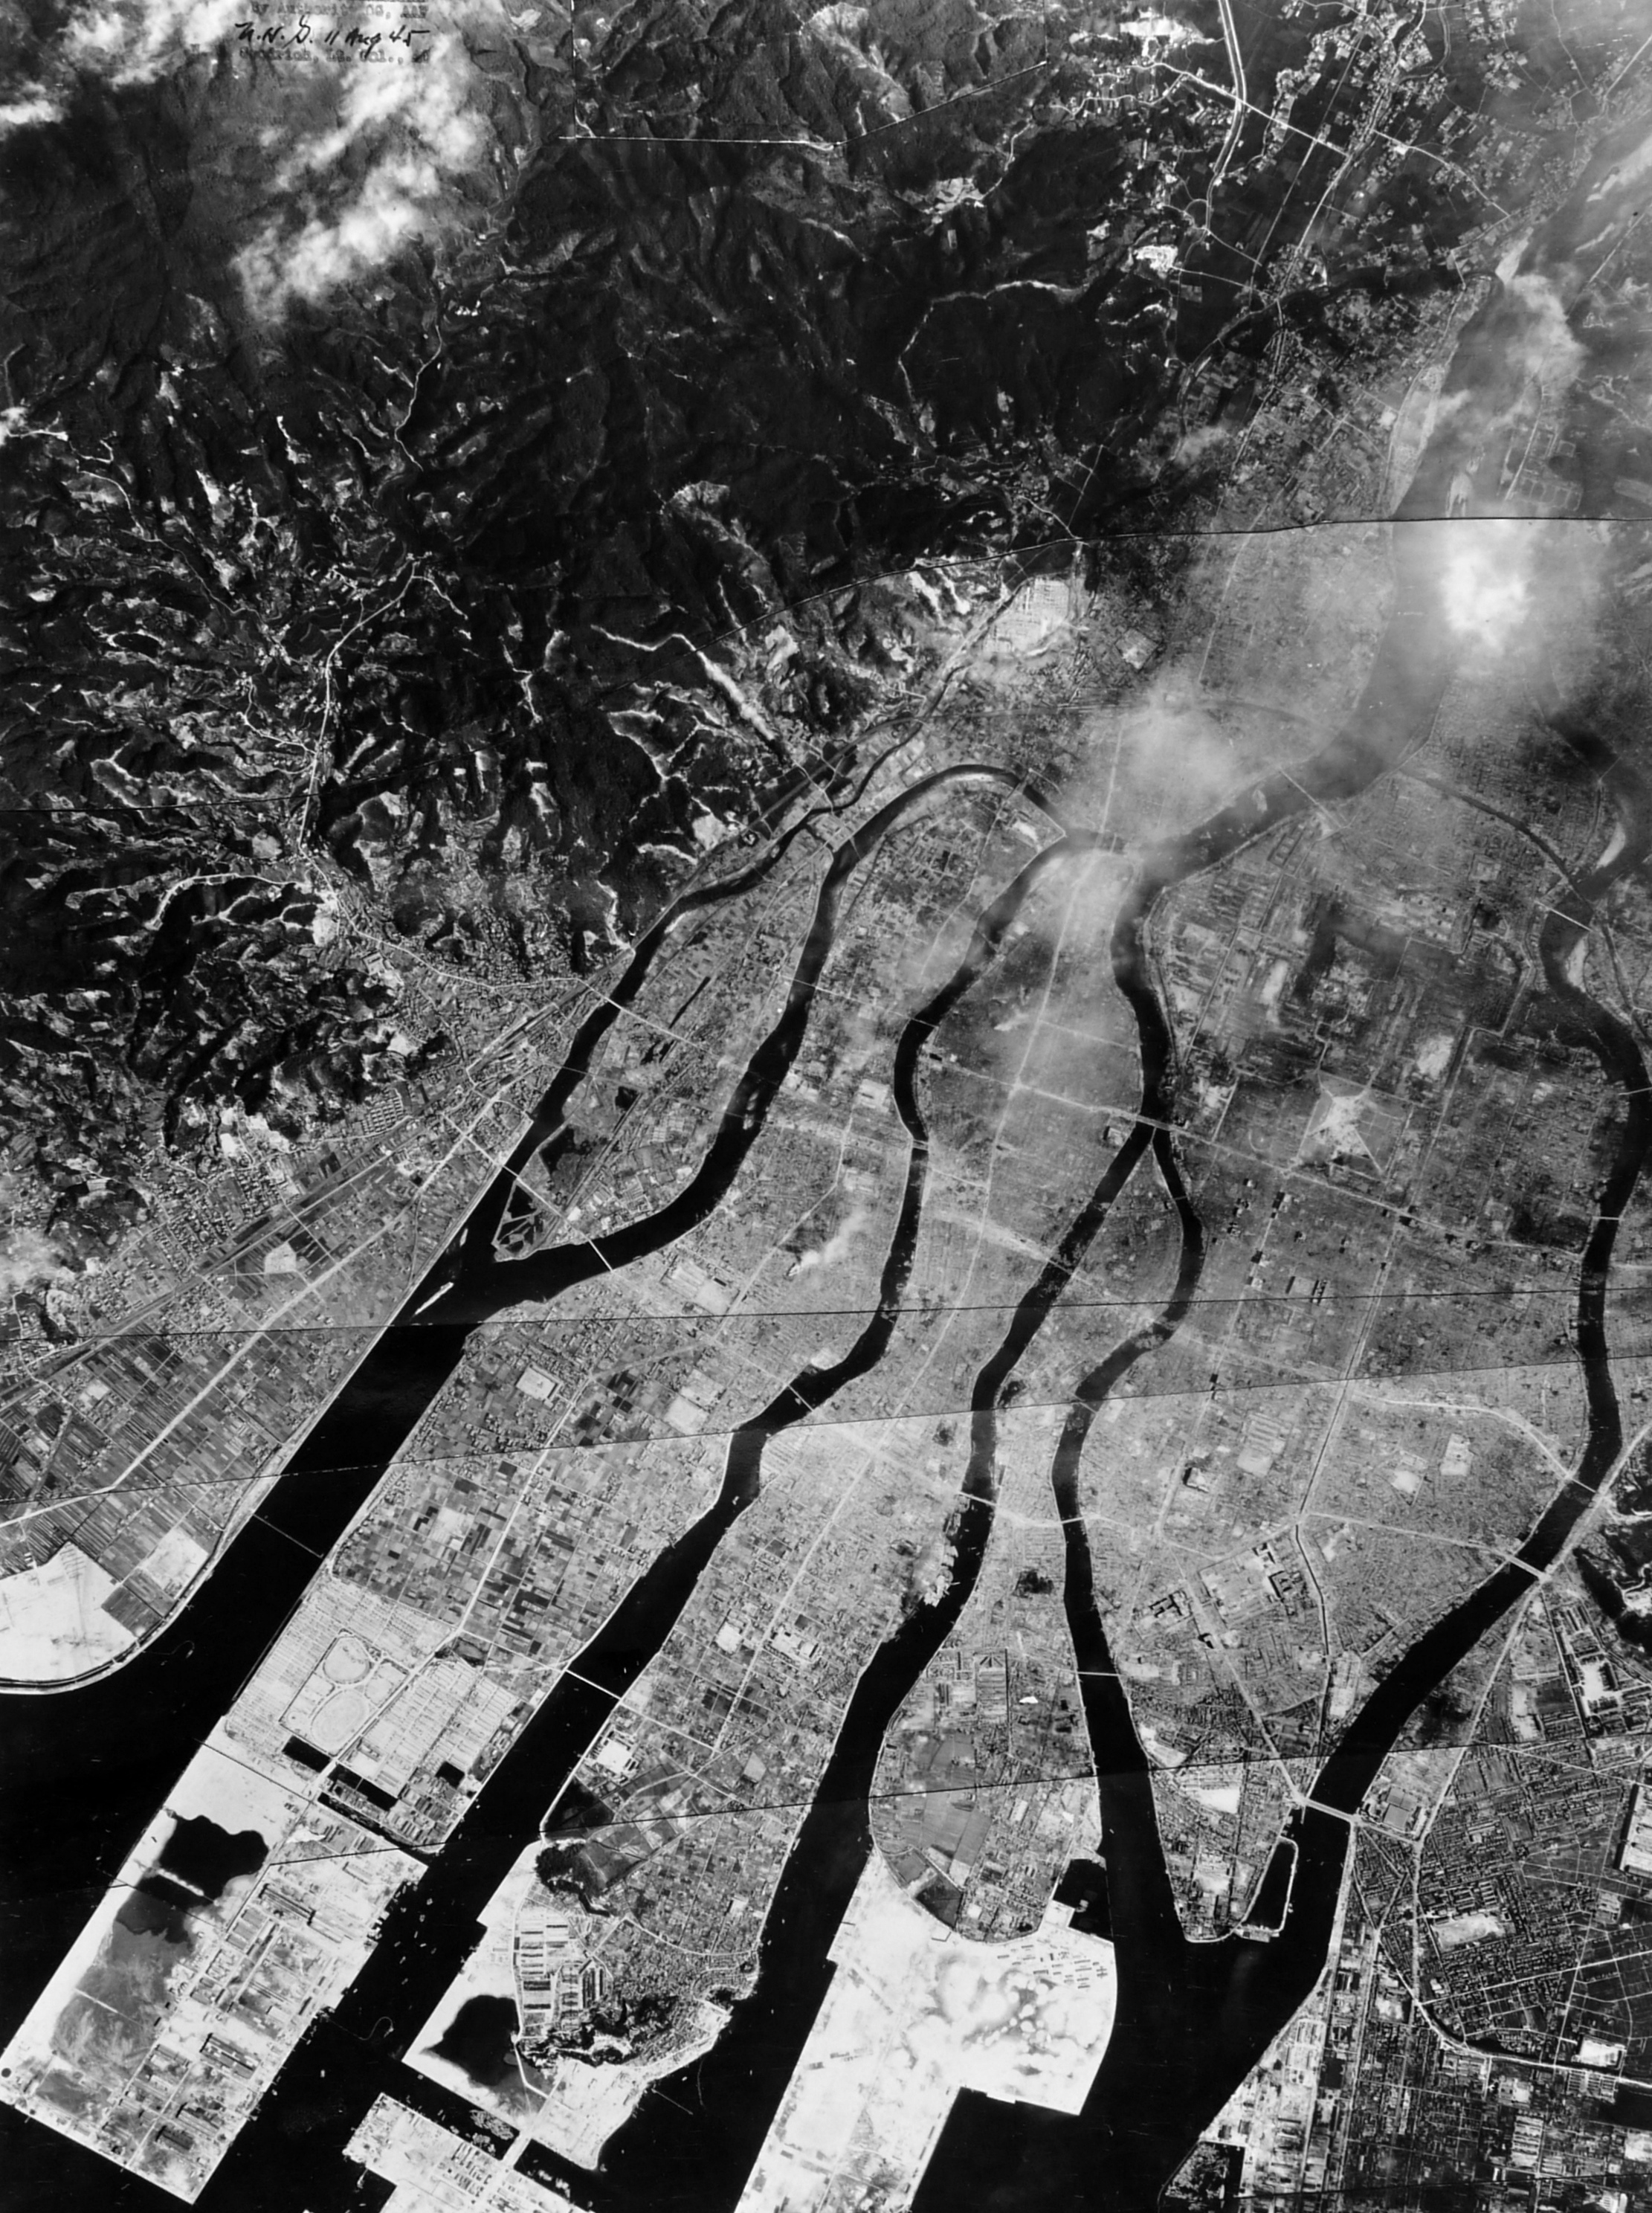 Aerial view of Hiroshima, Japan, Aug 1945